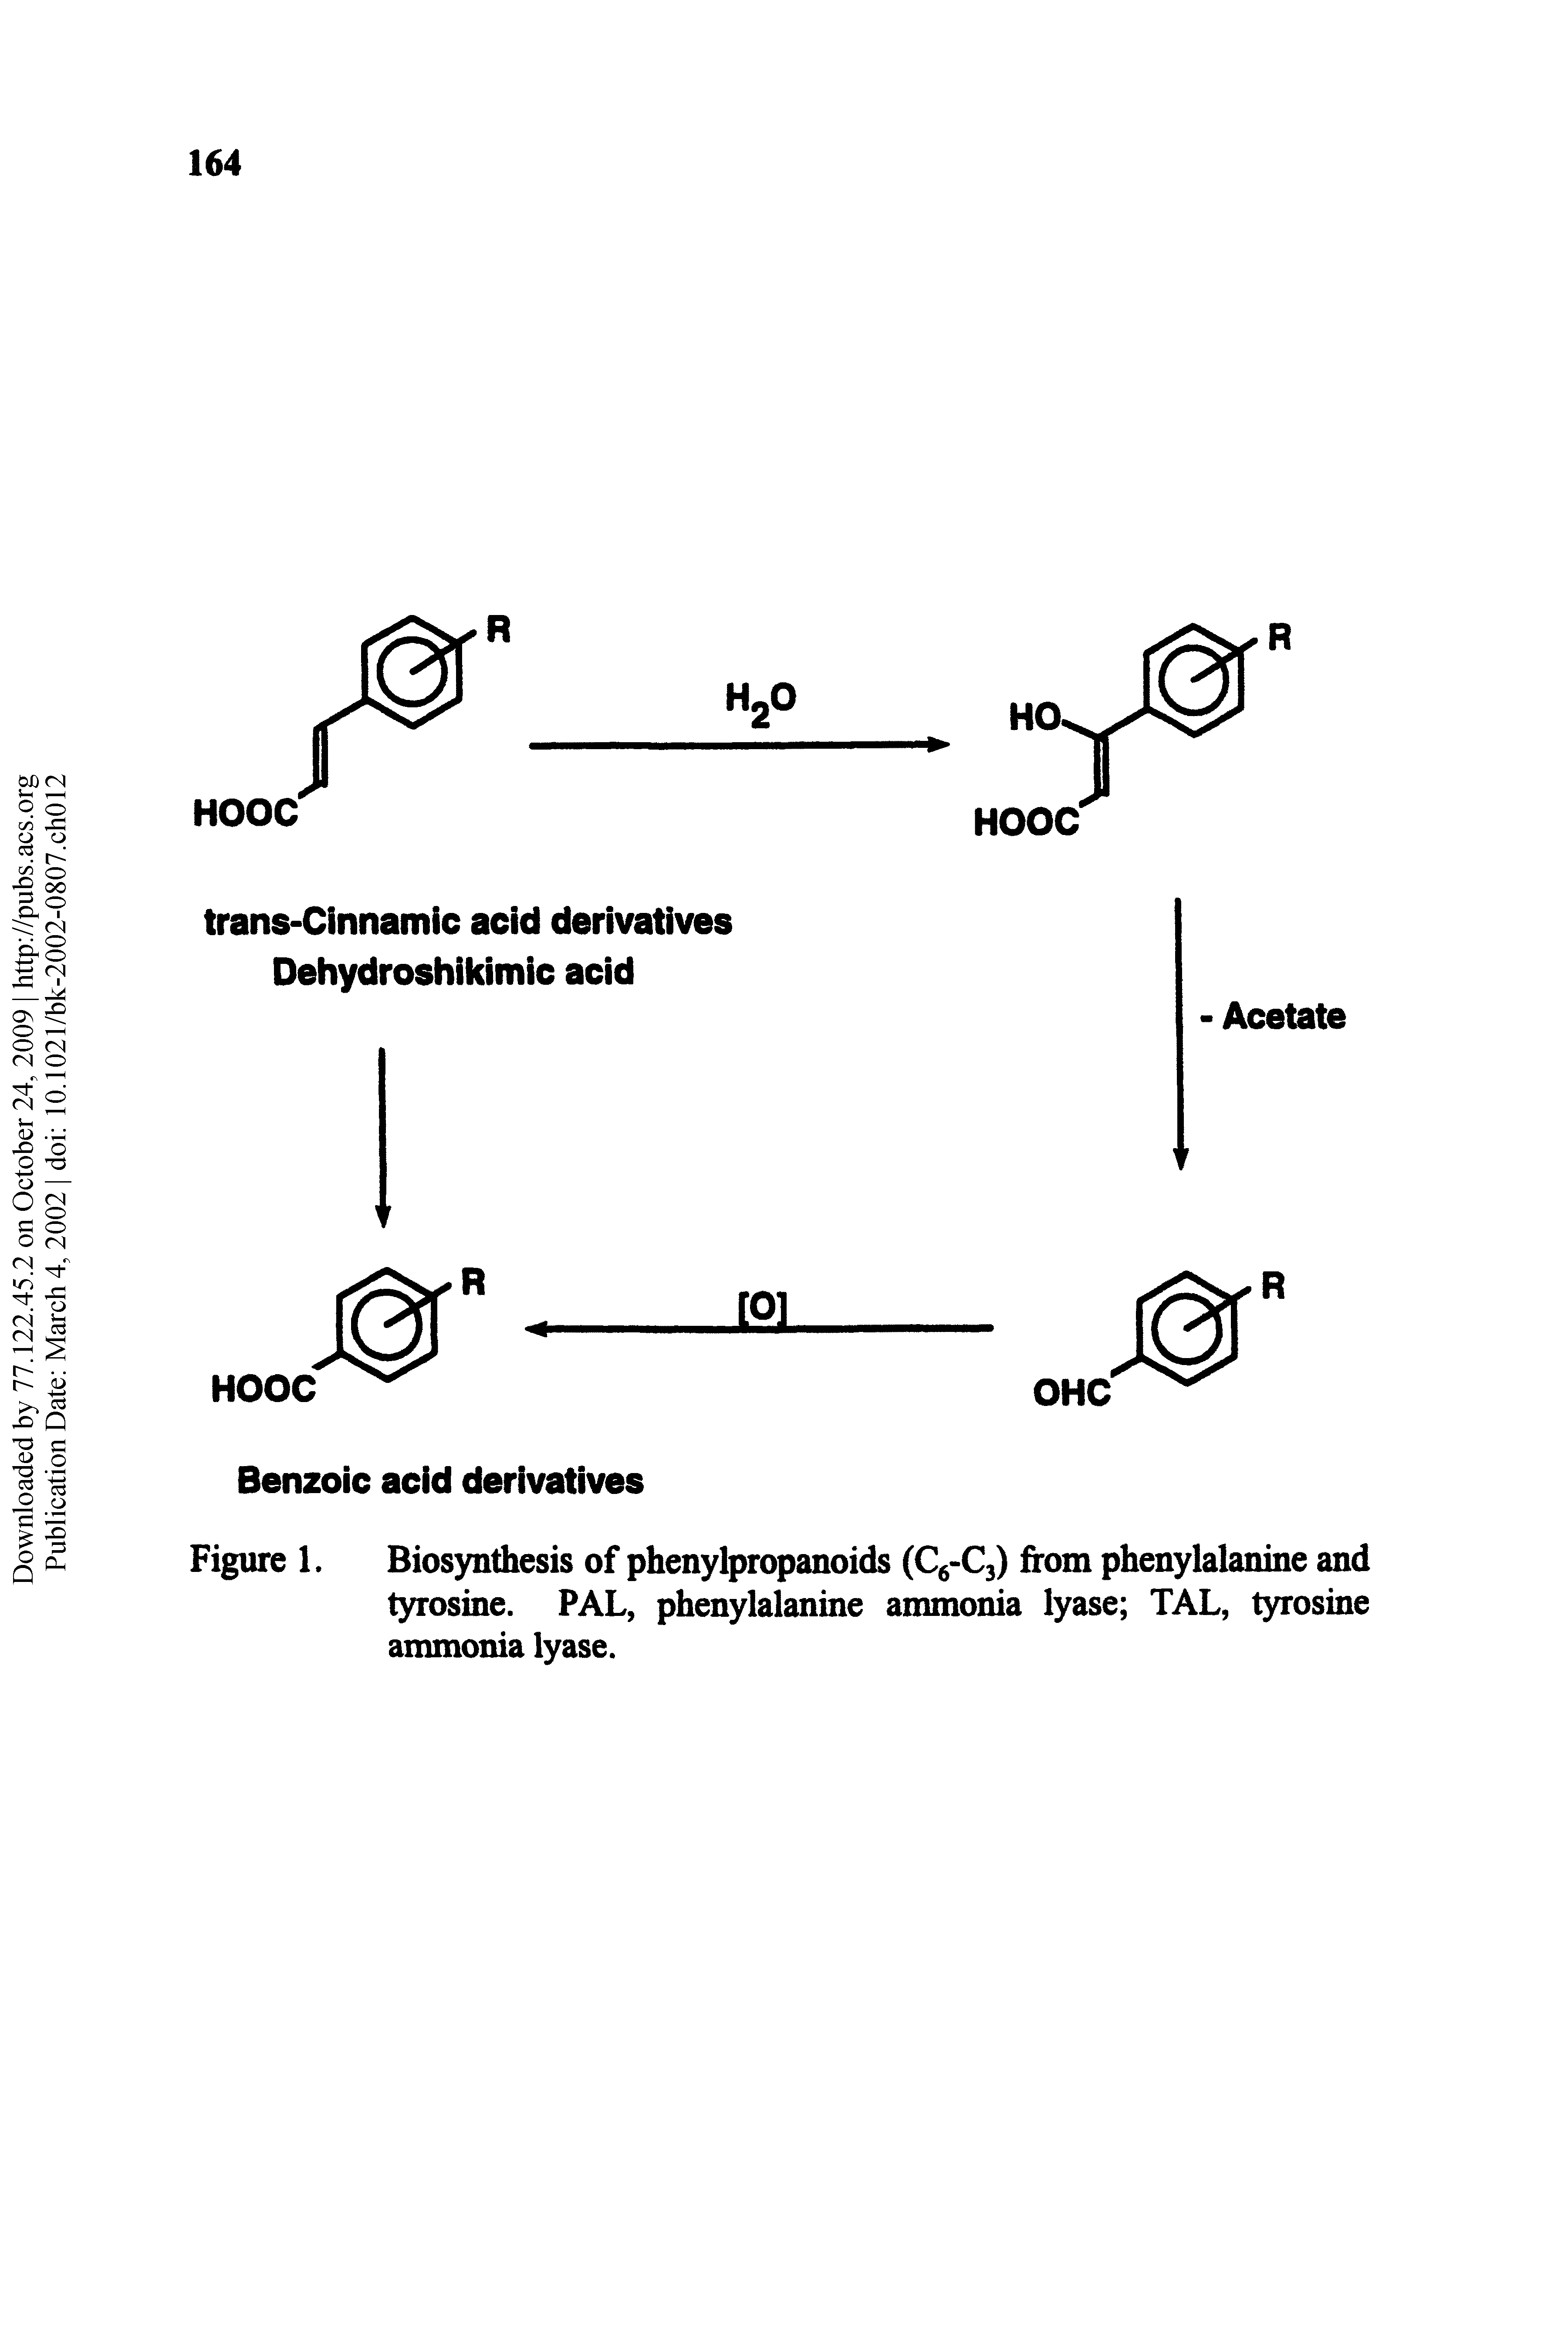 Figure 1. Biosynthesis of phenylpropanoids (Q-C3) from phenylalanine and tyrosine. PAL, phenylalanine ammonia lyase TAL, tyrosine ammonia lyase.